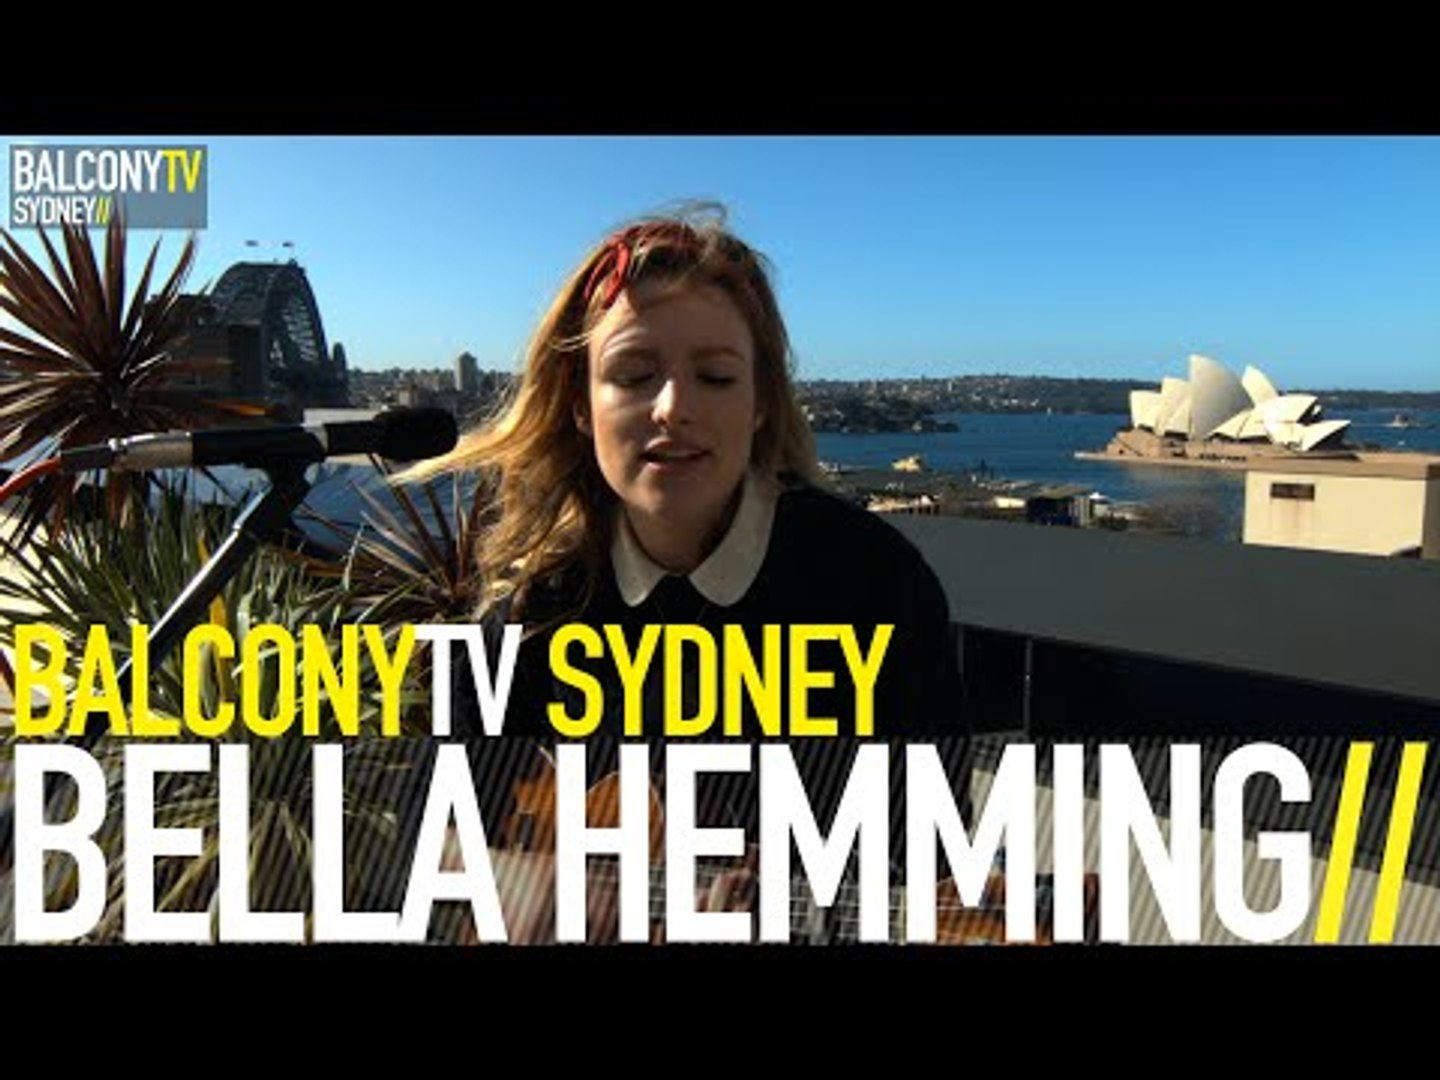 Bella Hemming The Stalker Song Balconytv Video Dailymotion - roblox stalker reborn song